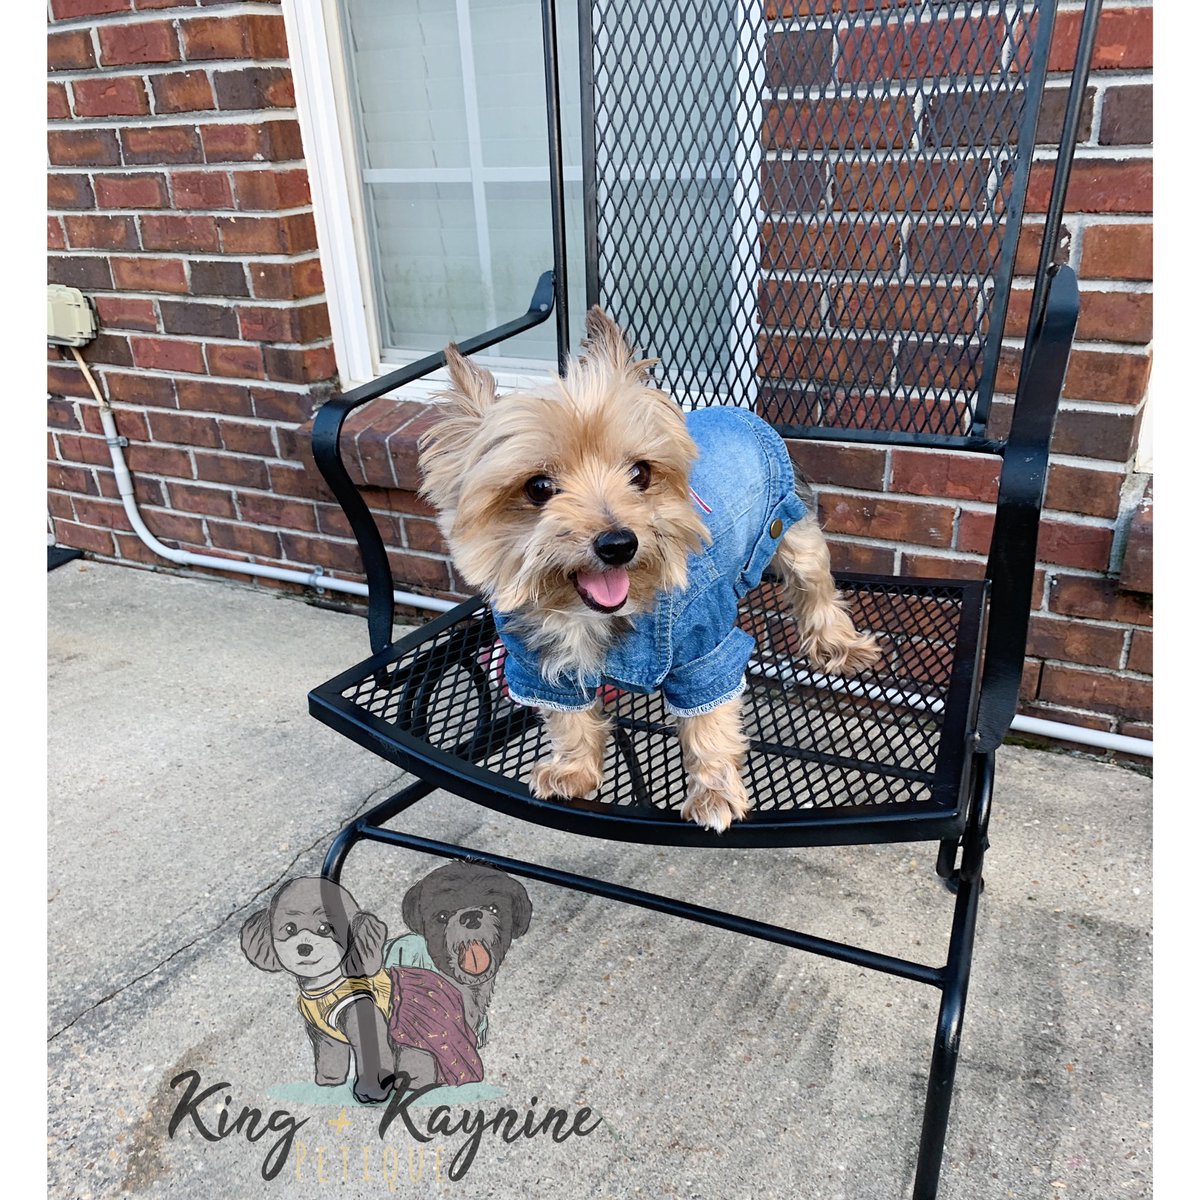 Our friend Marley Dressed in “Badlenciga” Denim Shirt

30% Off Sale Ends Soon

kingkaynine.com/?ref=c0nJGBaS-…

#shihtzu #petsofinstagram #petfriendly #doglover #petapparel #dogjacket #dogsofinsta #petfashion #dogbirthday #dogbirthdaycake #dograincoat #dogplaytime #dogplaydate